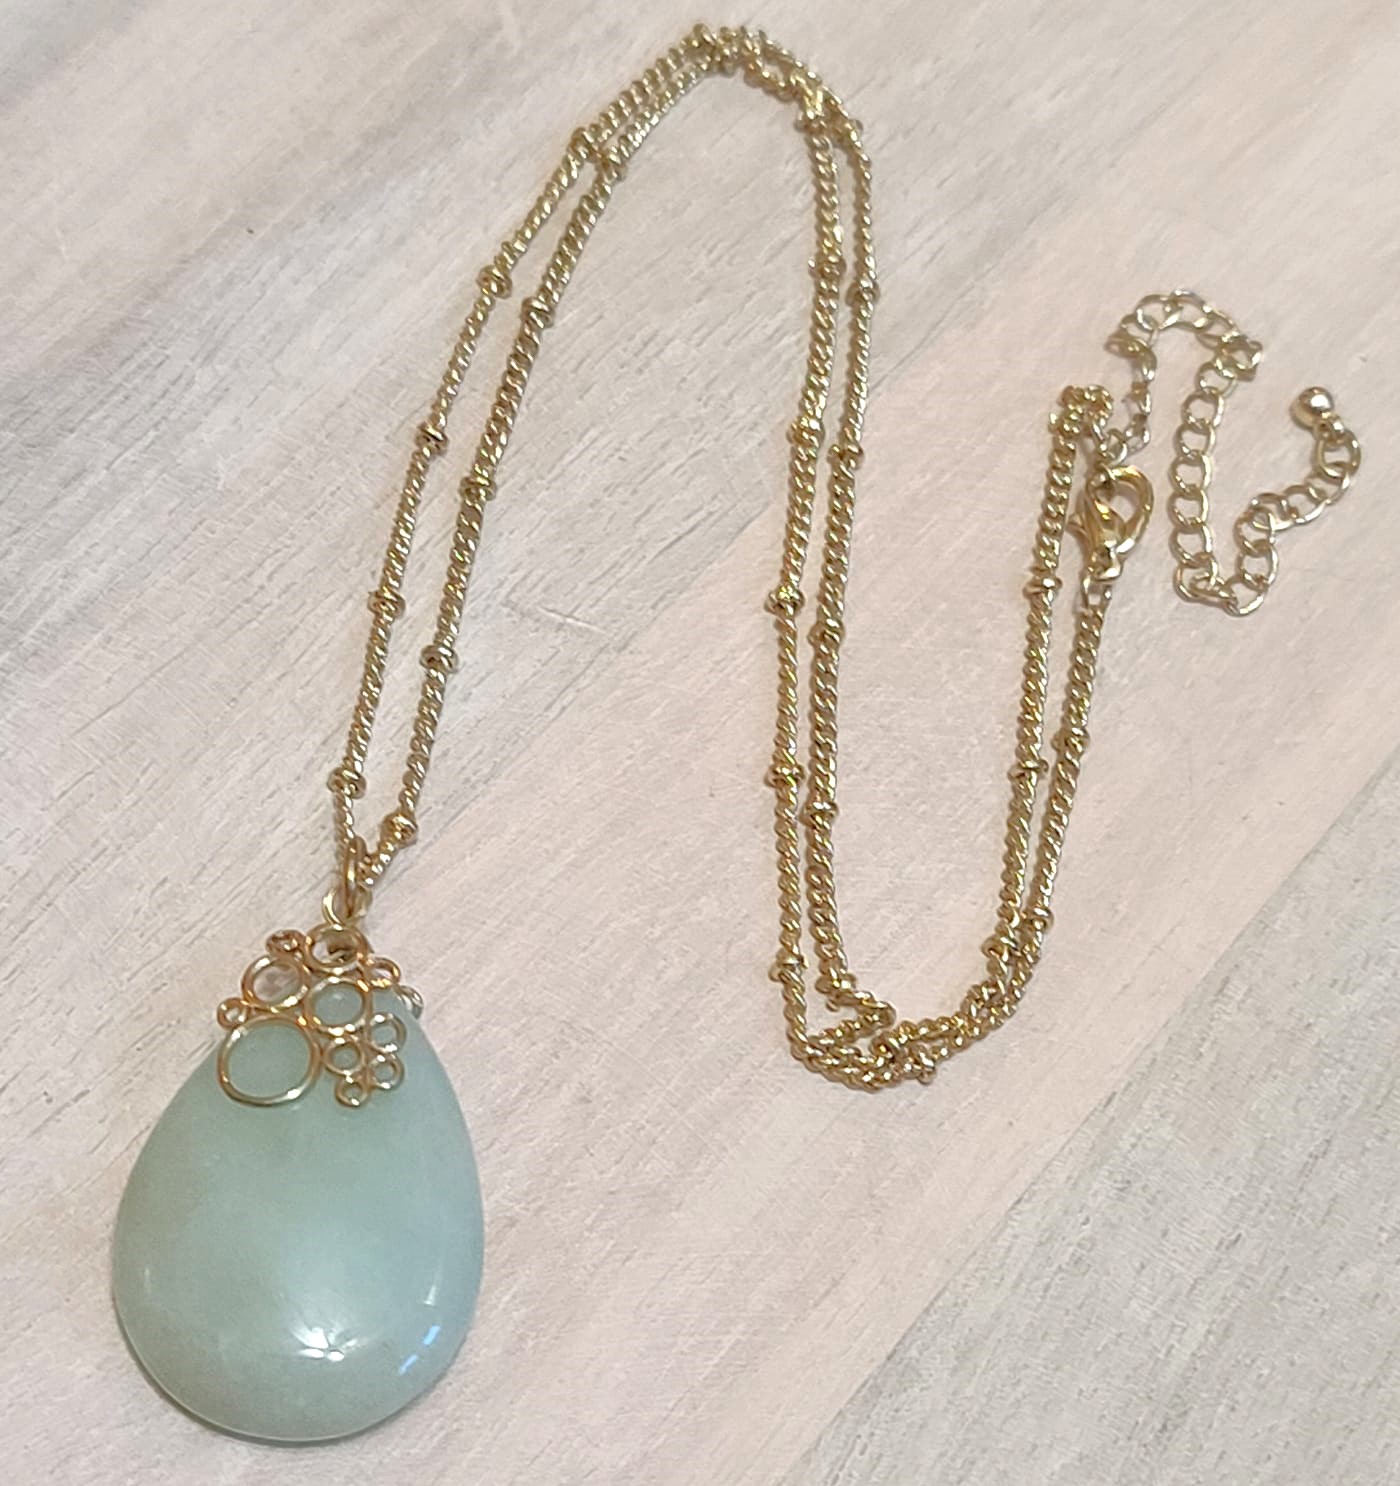 Gemstone pendant necklace, green dyed quartz gemstone, with chain